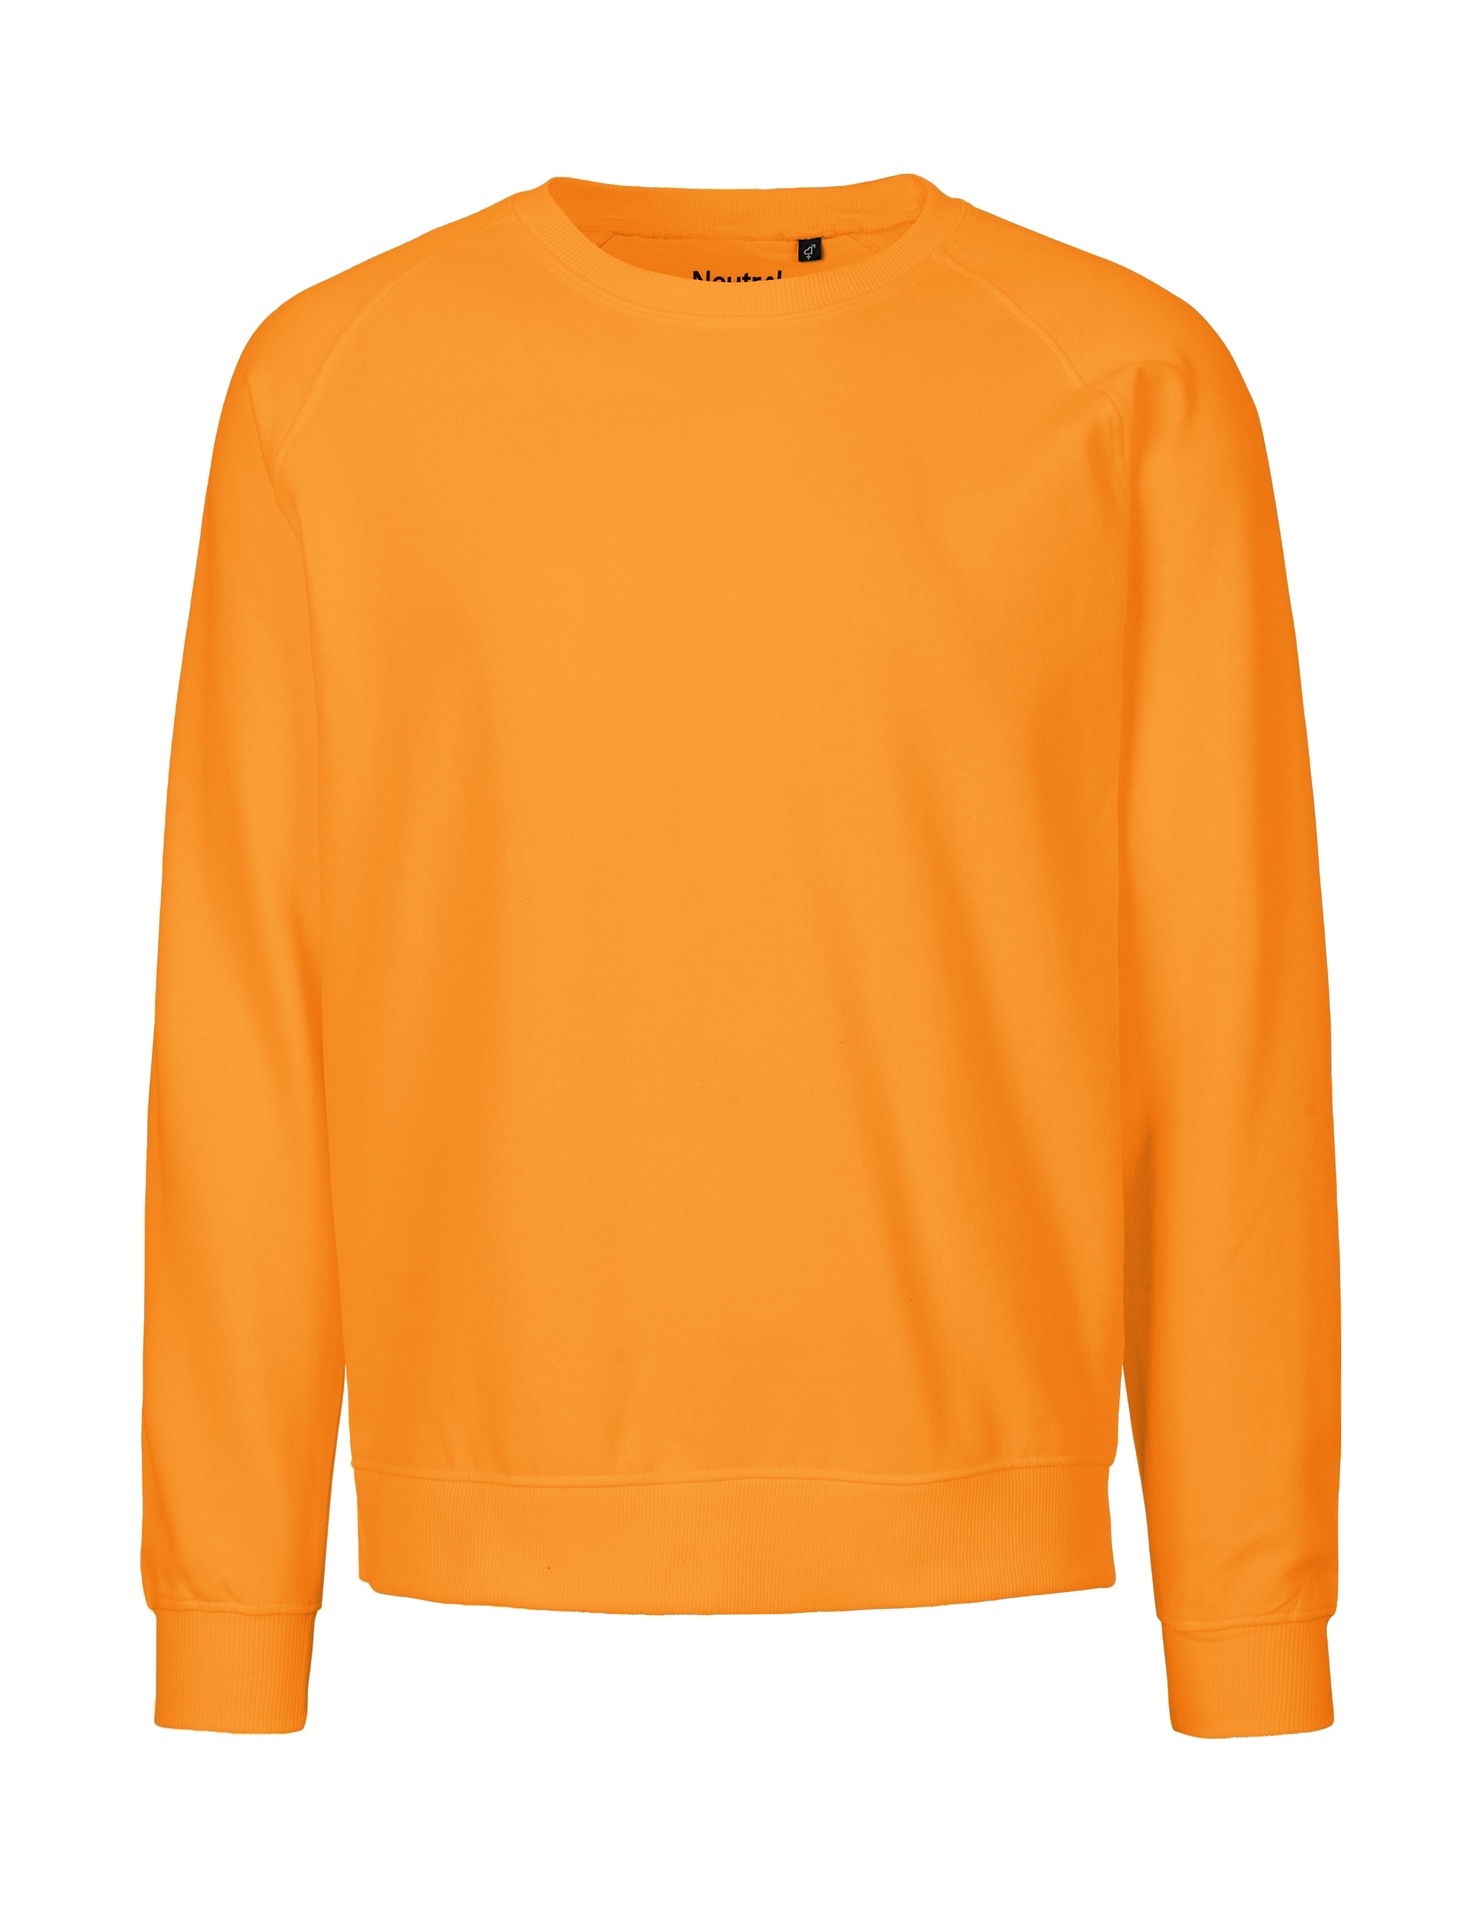 [PR/02788] Unisex Sweatshirt (Okay Orange 31, S)